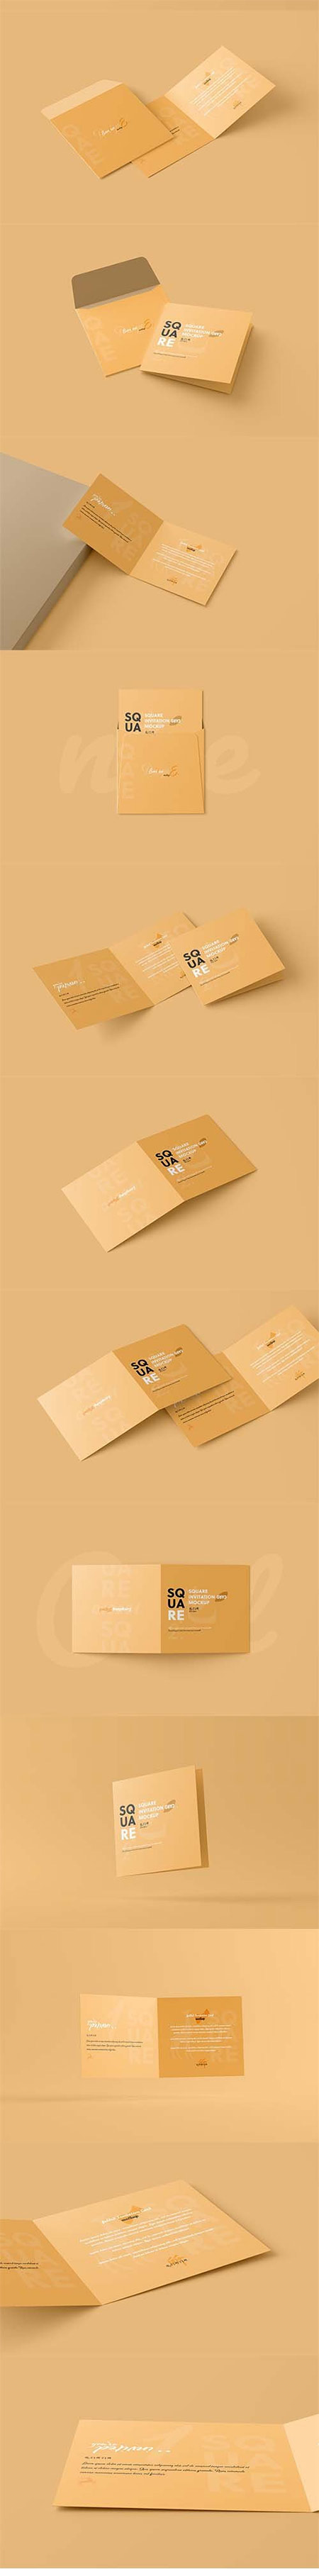 Square Folded Invitation Card Mockup